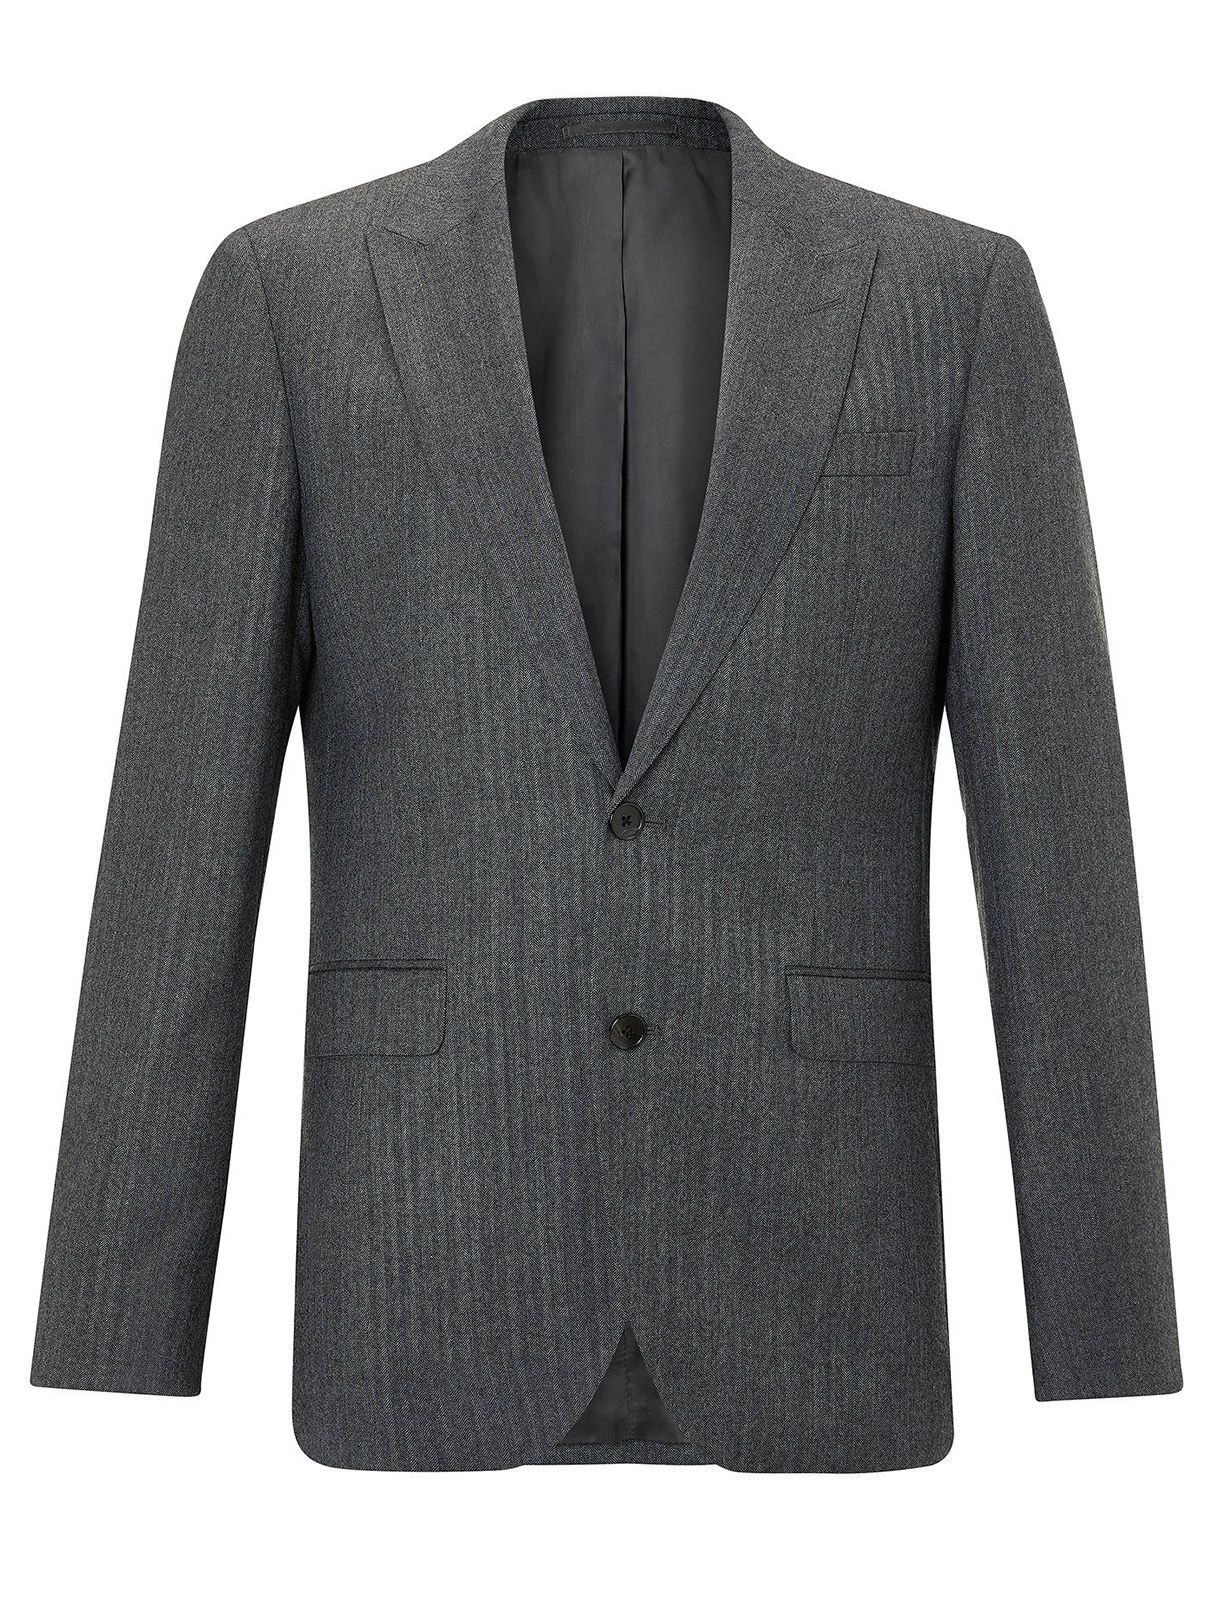 John Lewis & Partners Herringbone Grey Tailored Suit Jacket